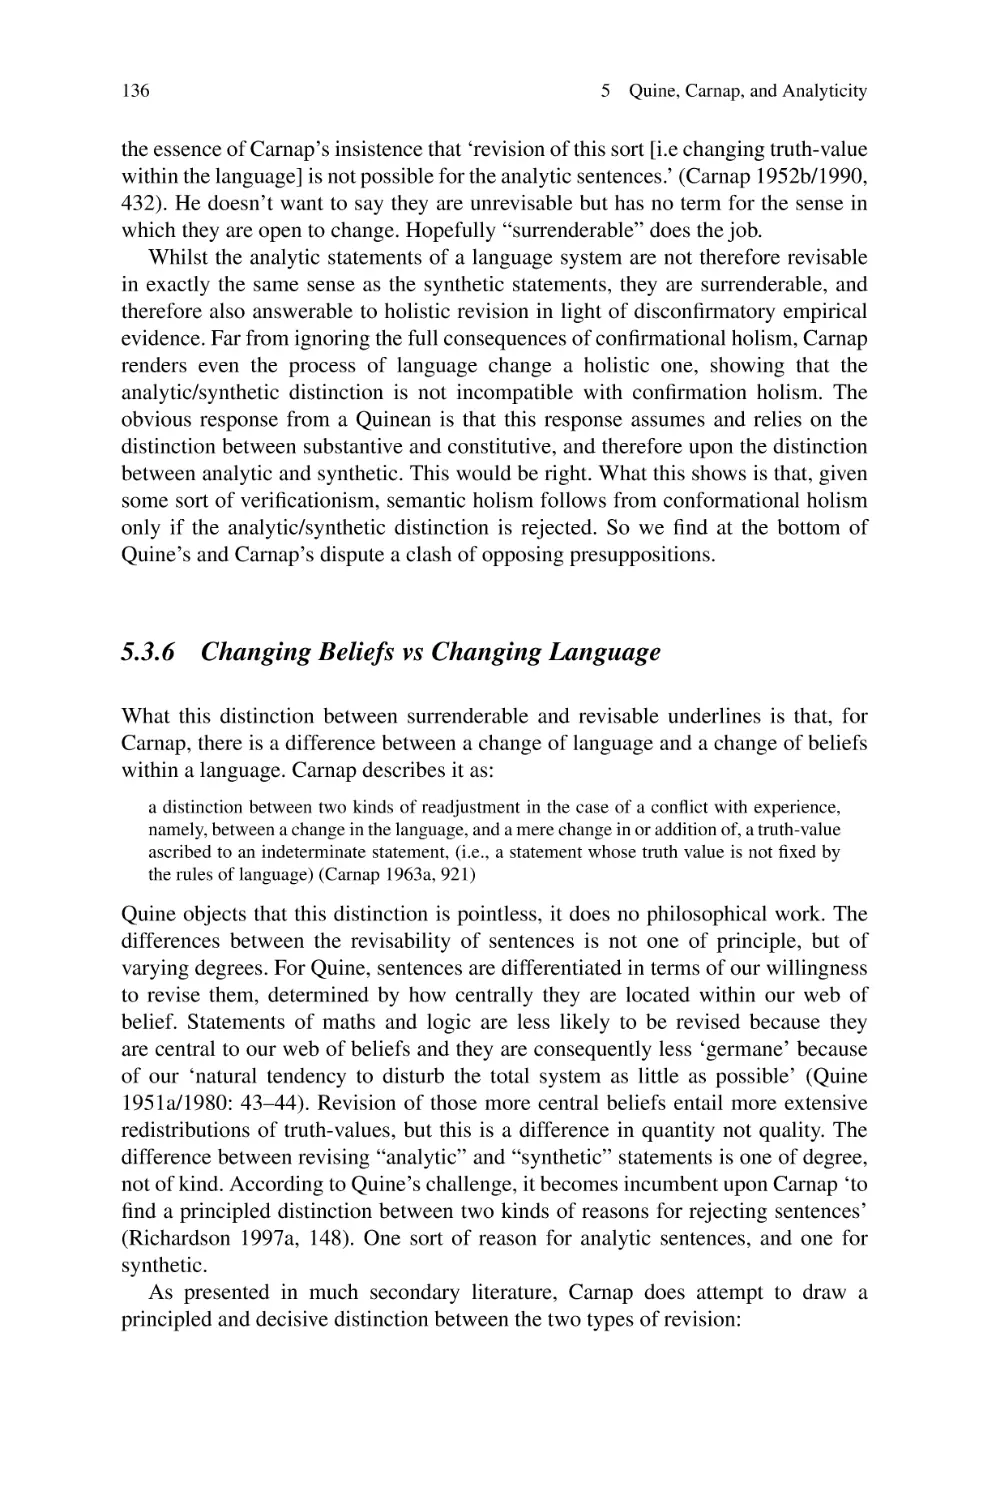 5.3.6 Changing Beliefs vs Changing Language